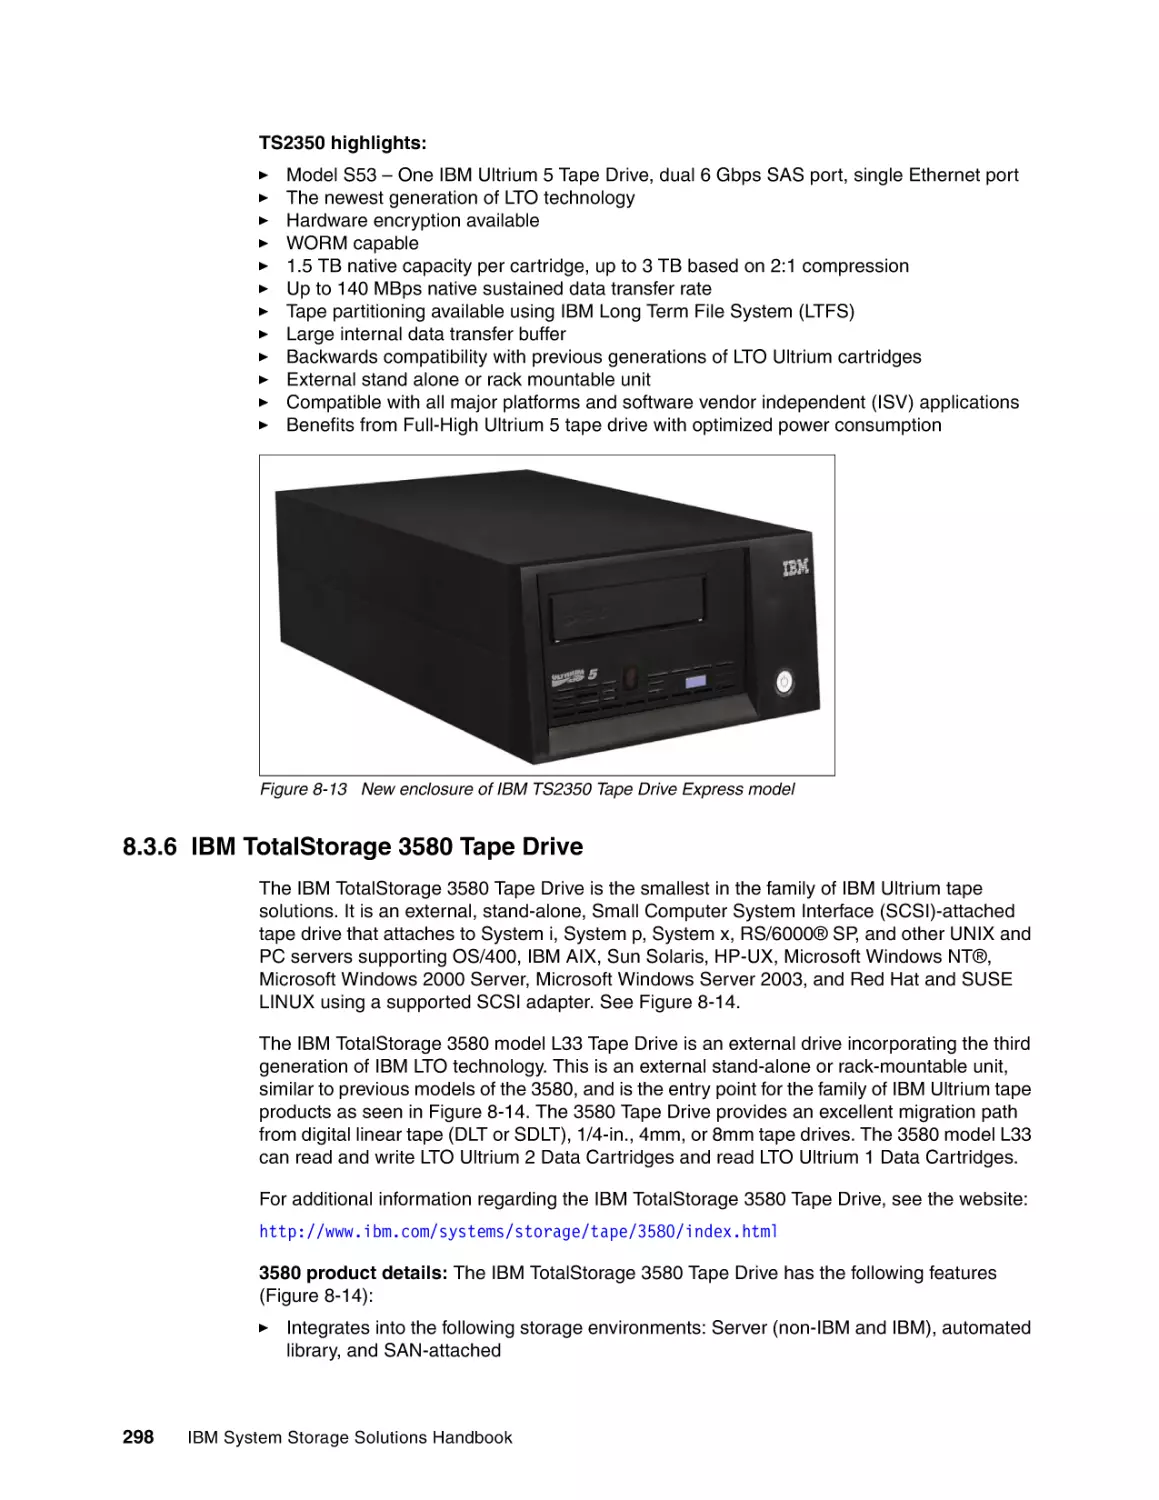 8.3.6 IBM TotalStorage 3580 Tape Drive